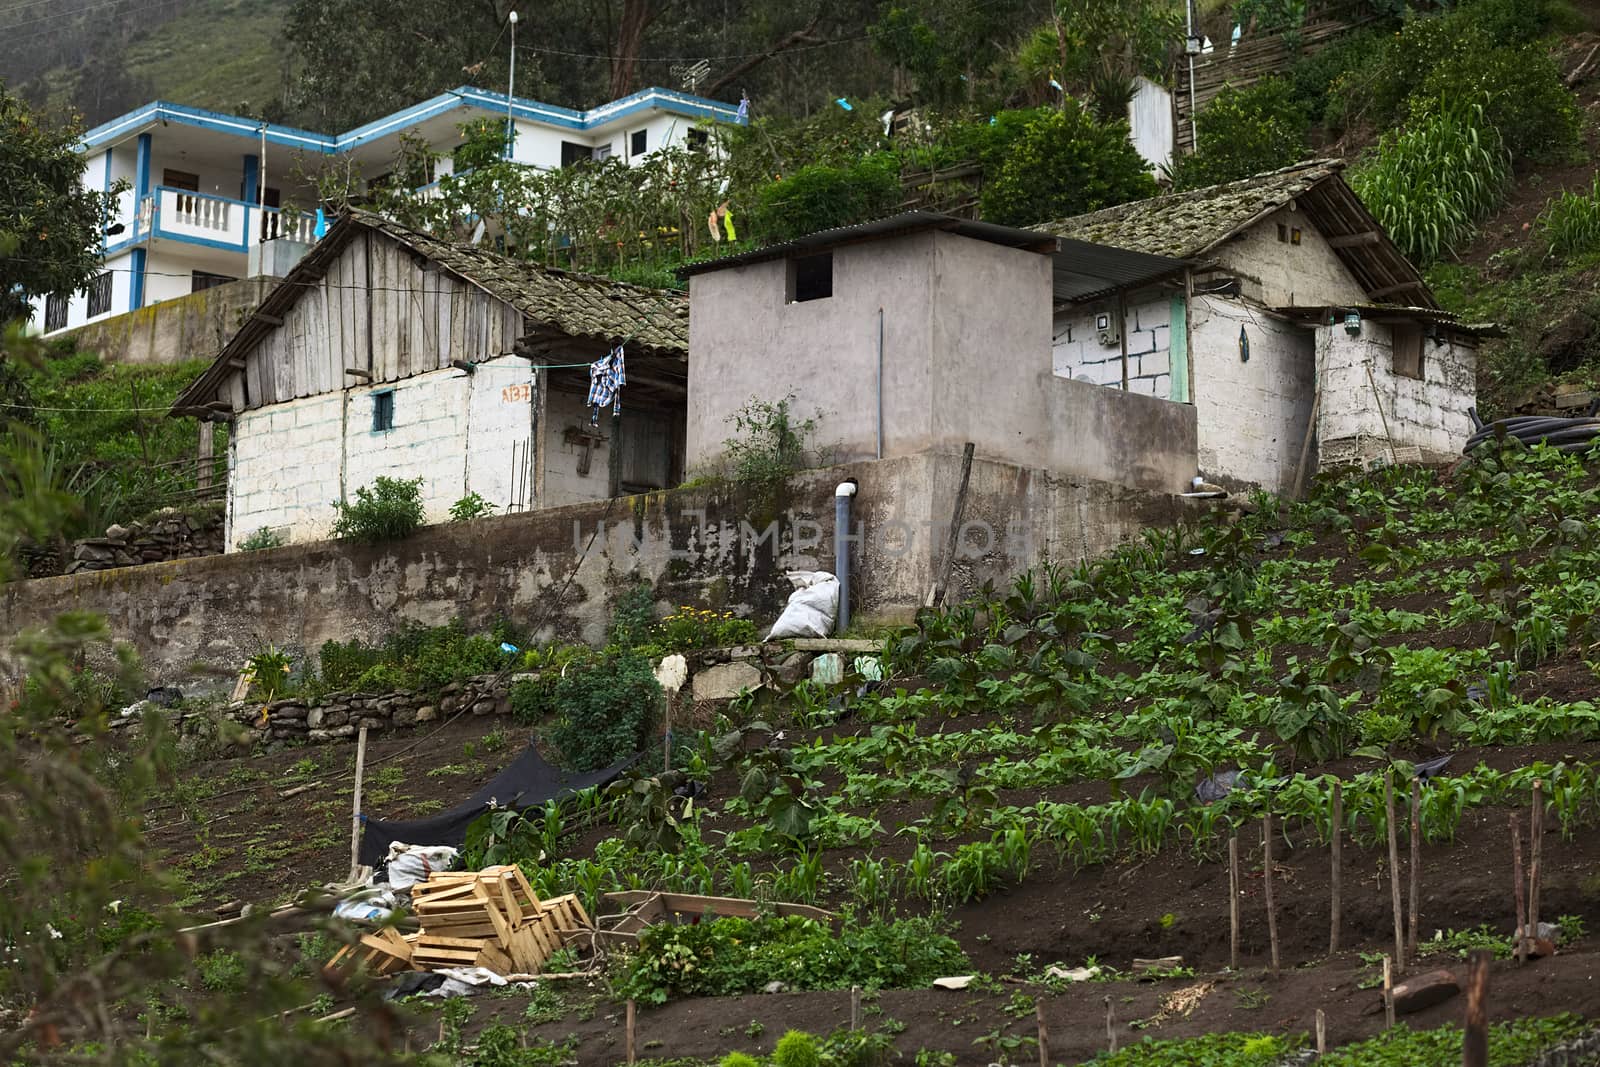 TUNGURAHUA, ECUADOR - MAY 12, 2014: Small house with a garden along the road between Ambato and Banos on May 12, 2014 in Tungurahua Province, Ecuador